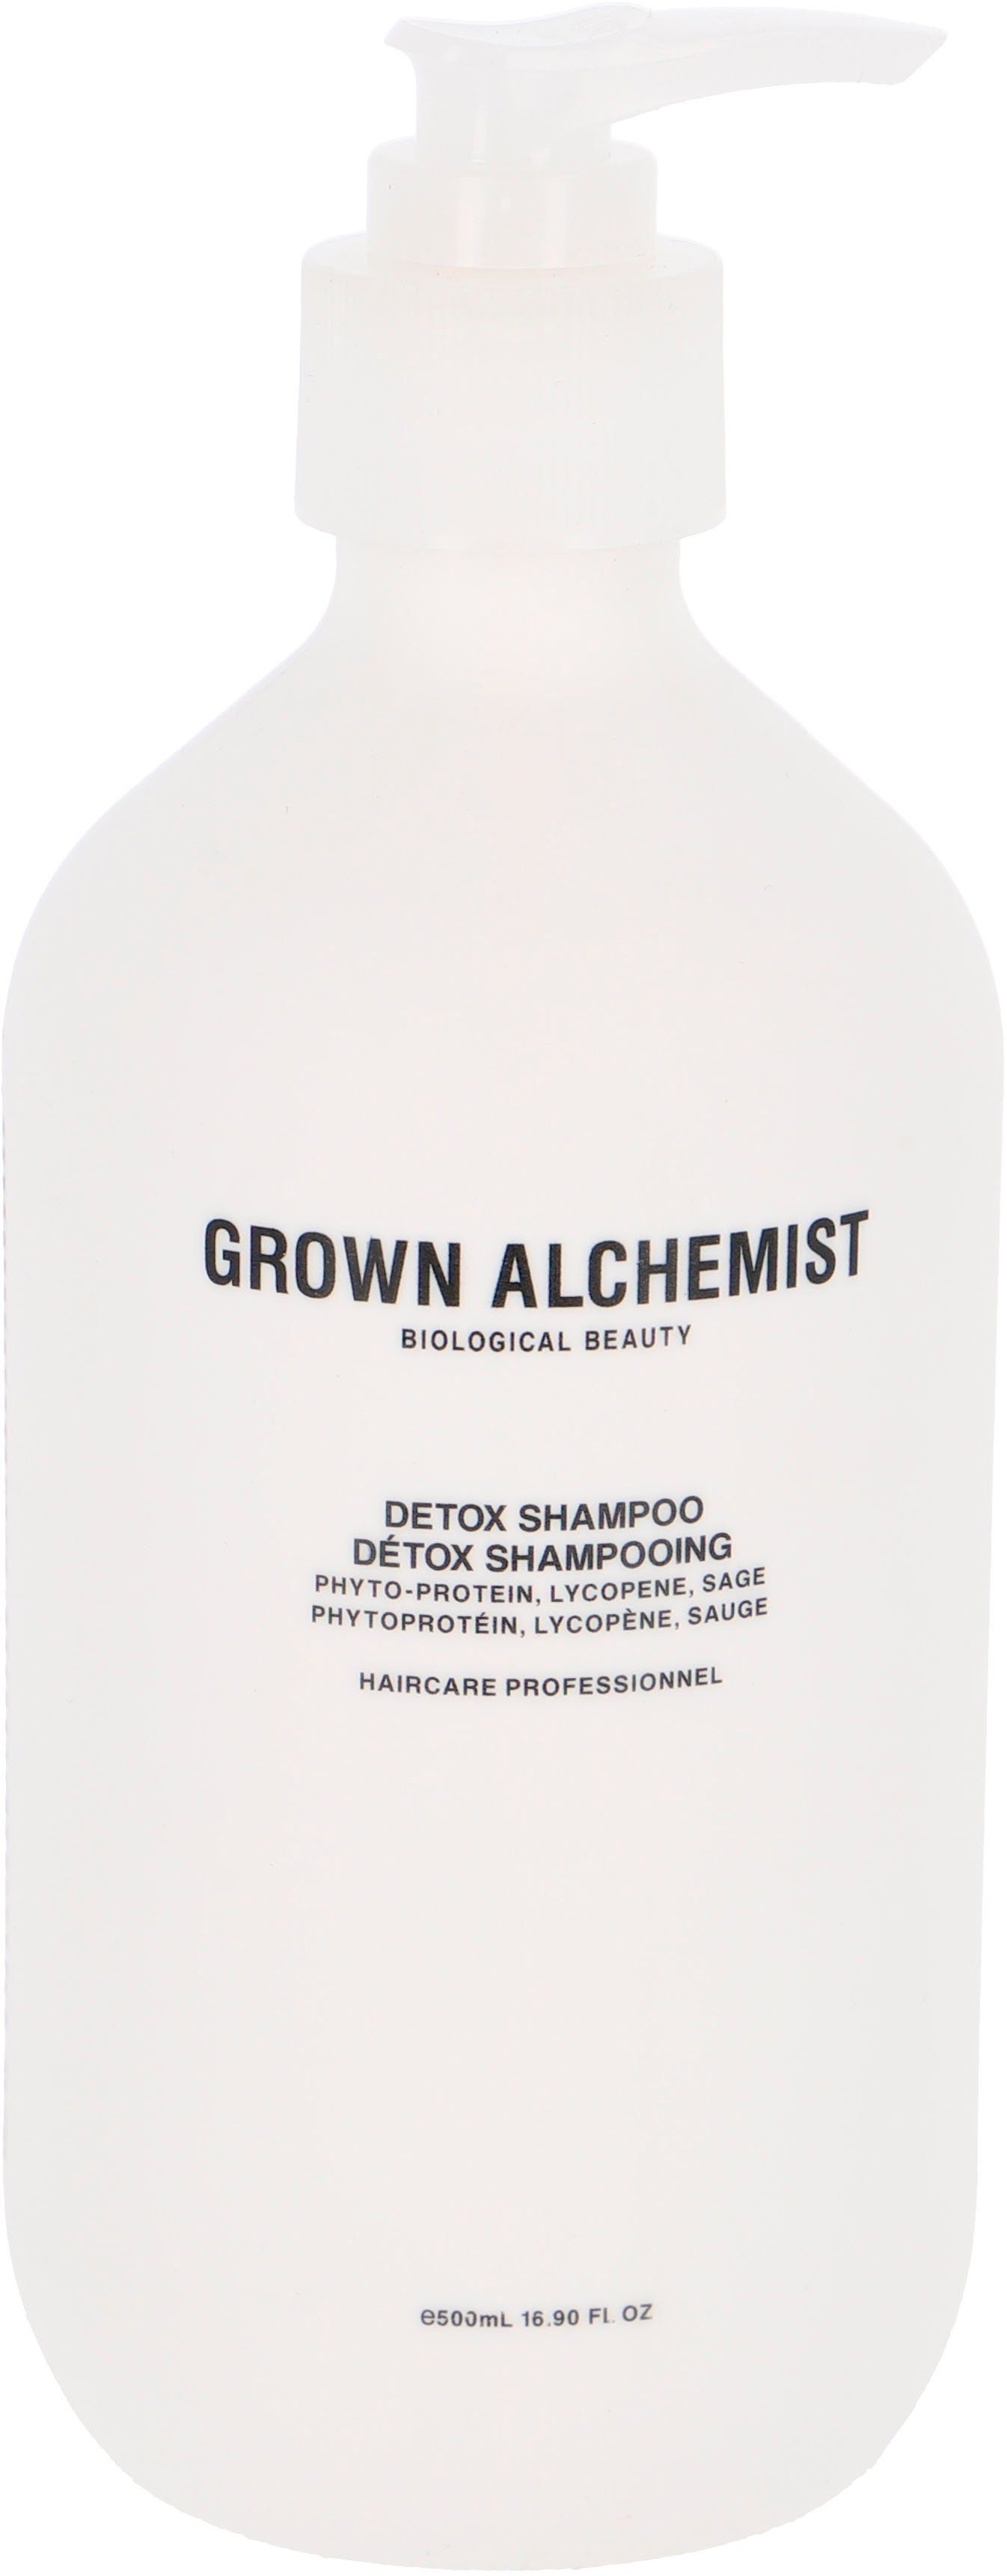 GROWN ALCHEMIST Haarshampoo Detox - Shampoo 0.1, Hydrolyzed Silk Protein, Lycopene, Sage